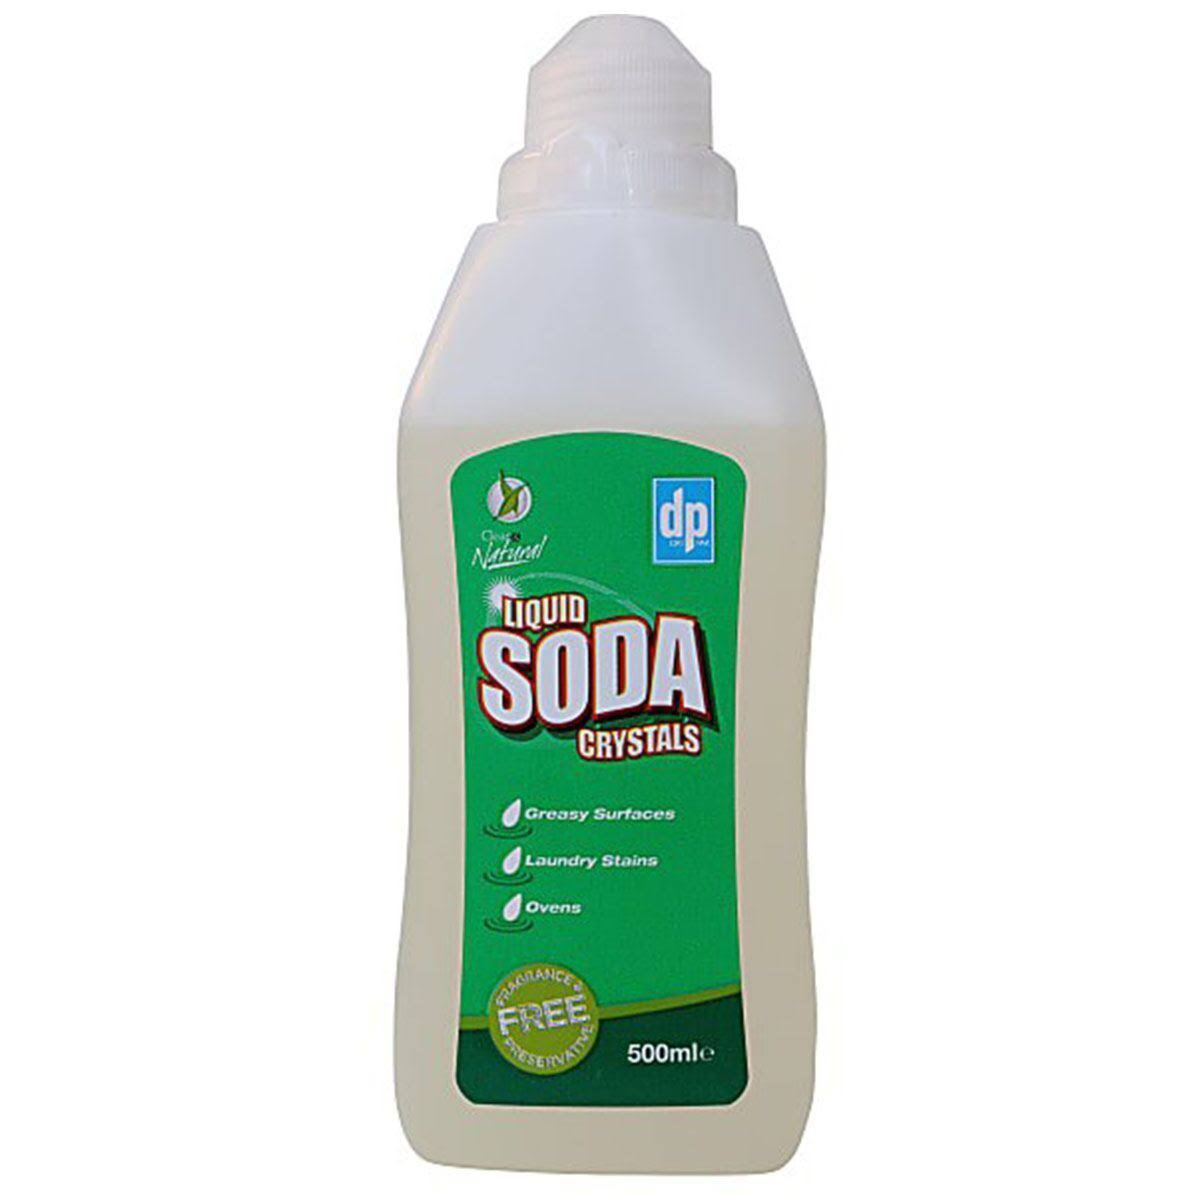 Caustic Soda Original & Best Drain Cleaner Unblock 500g 